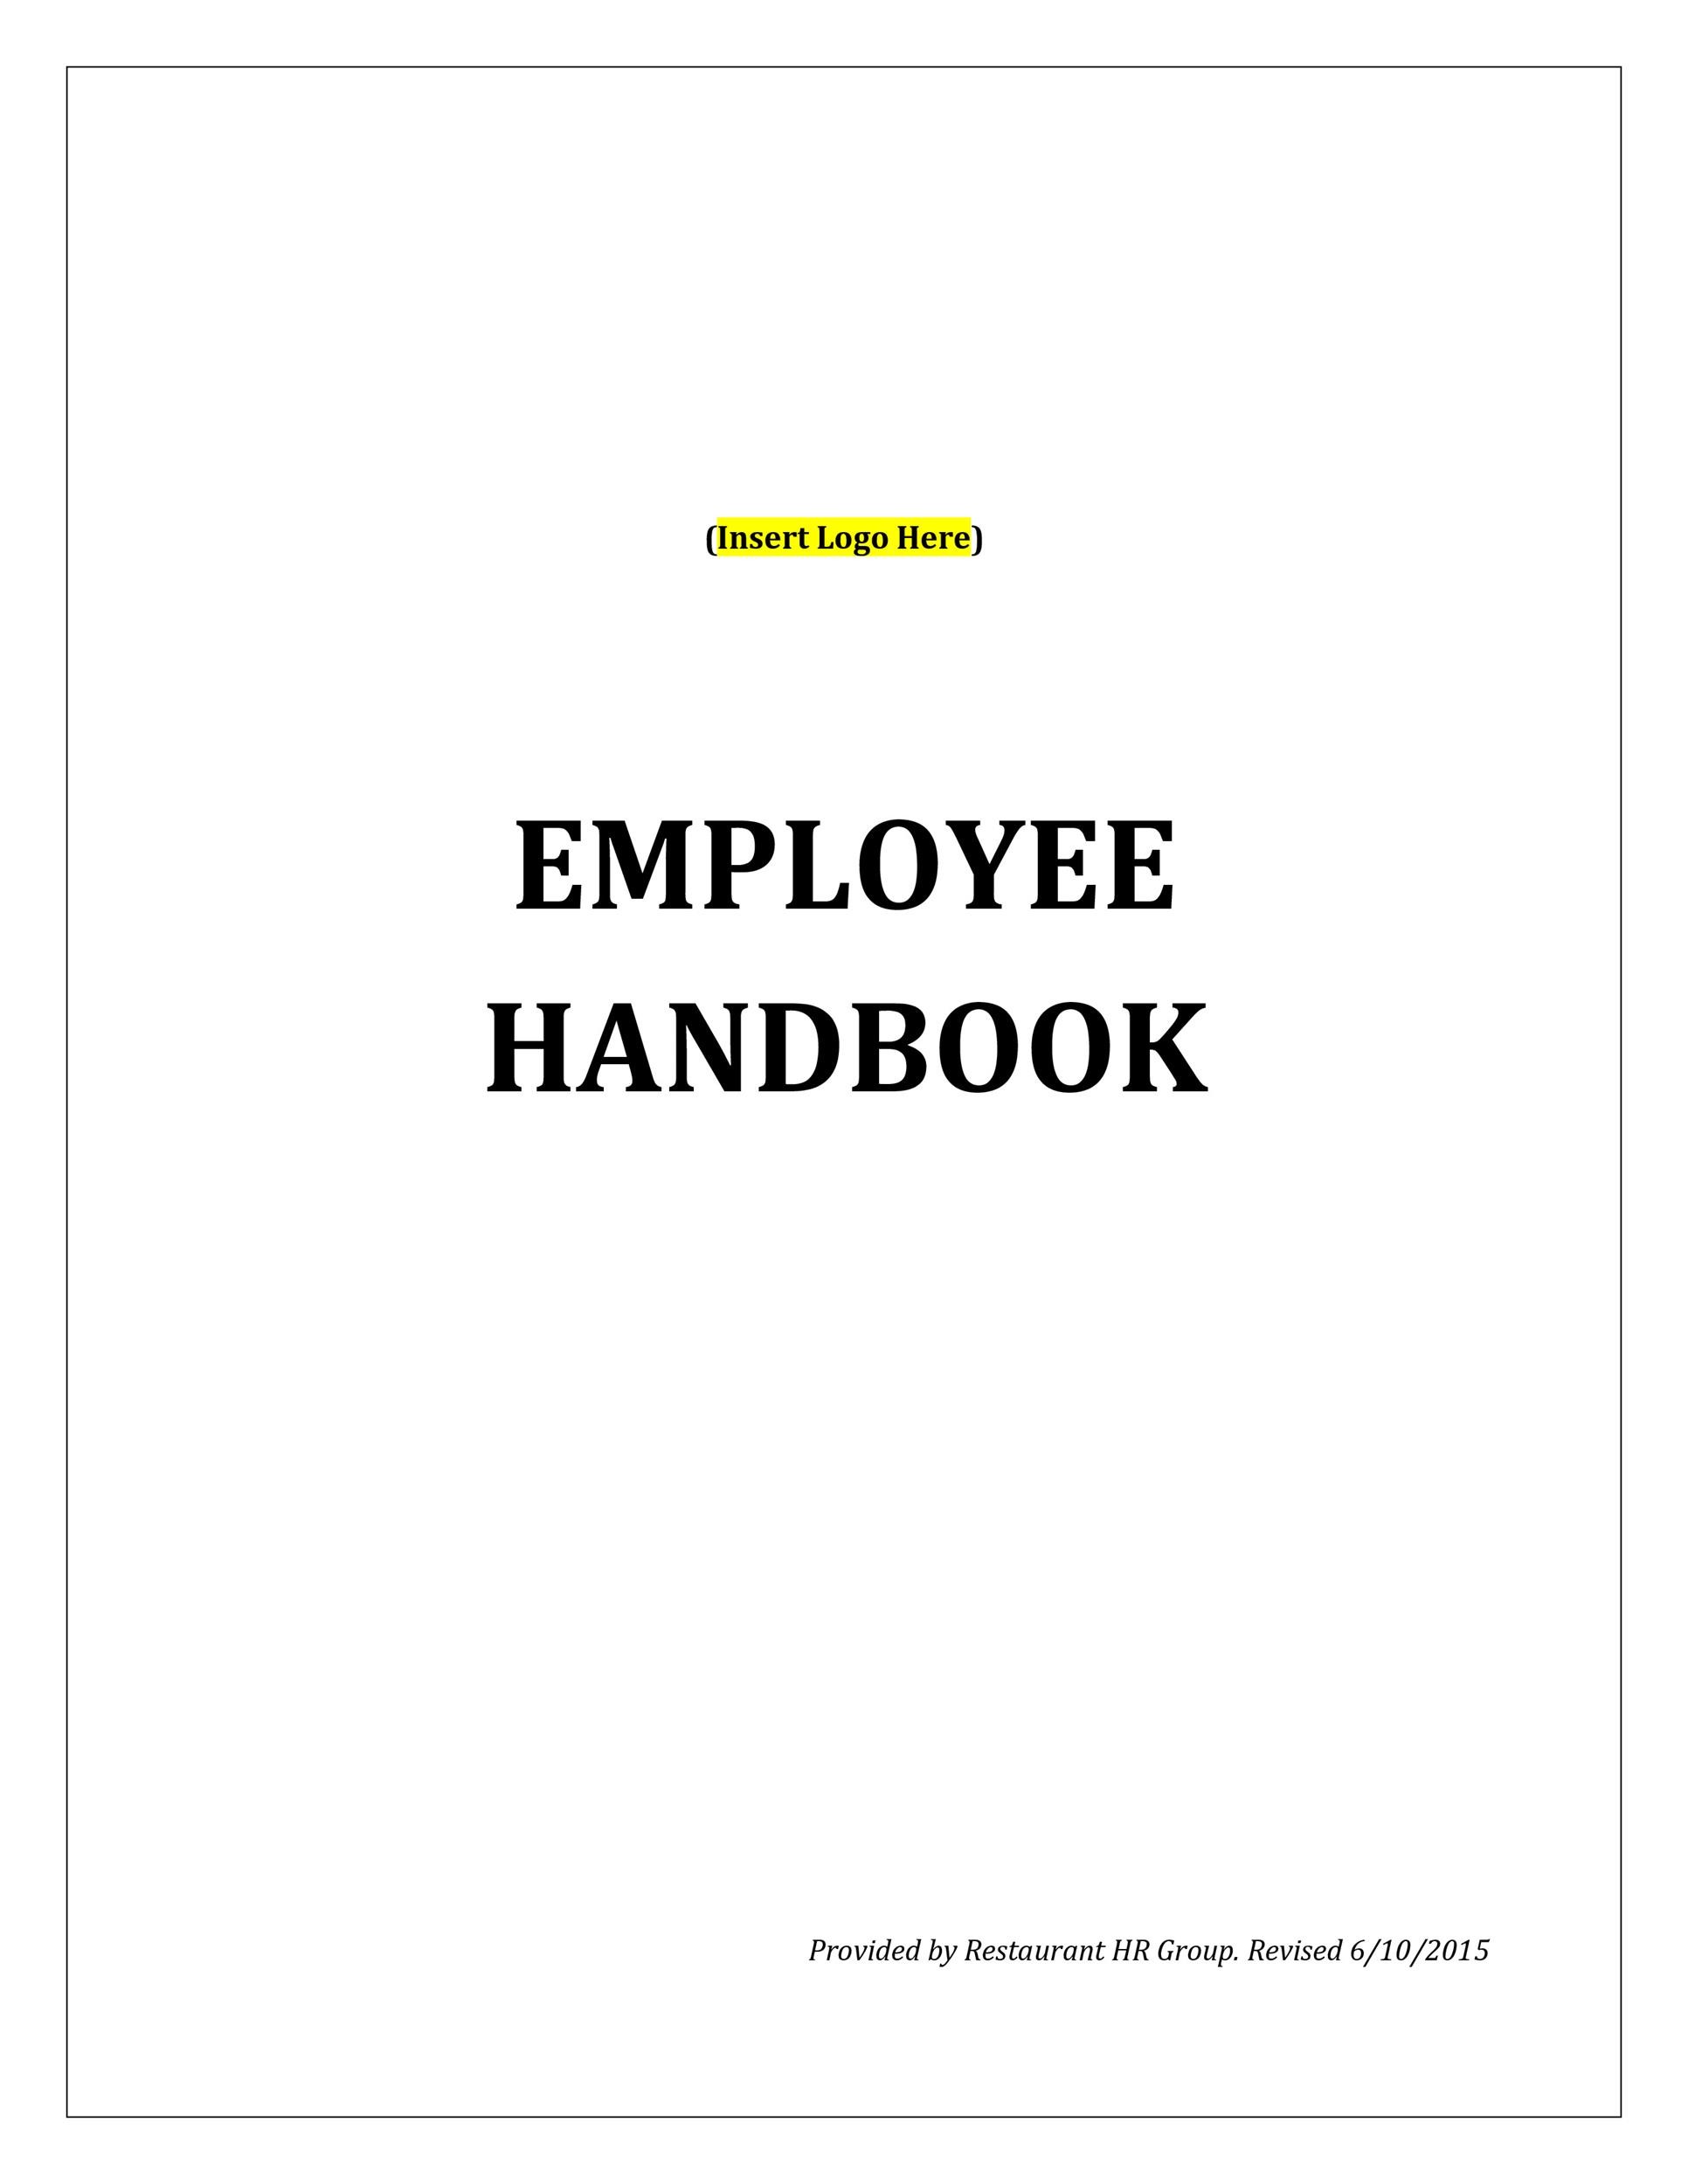 Free employee handbook template 05